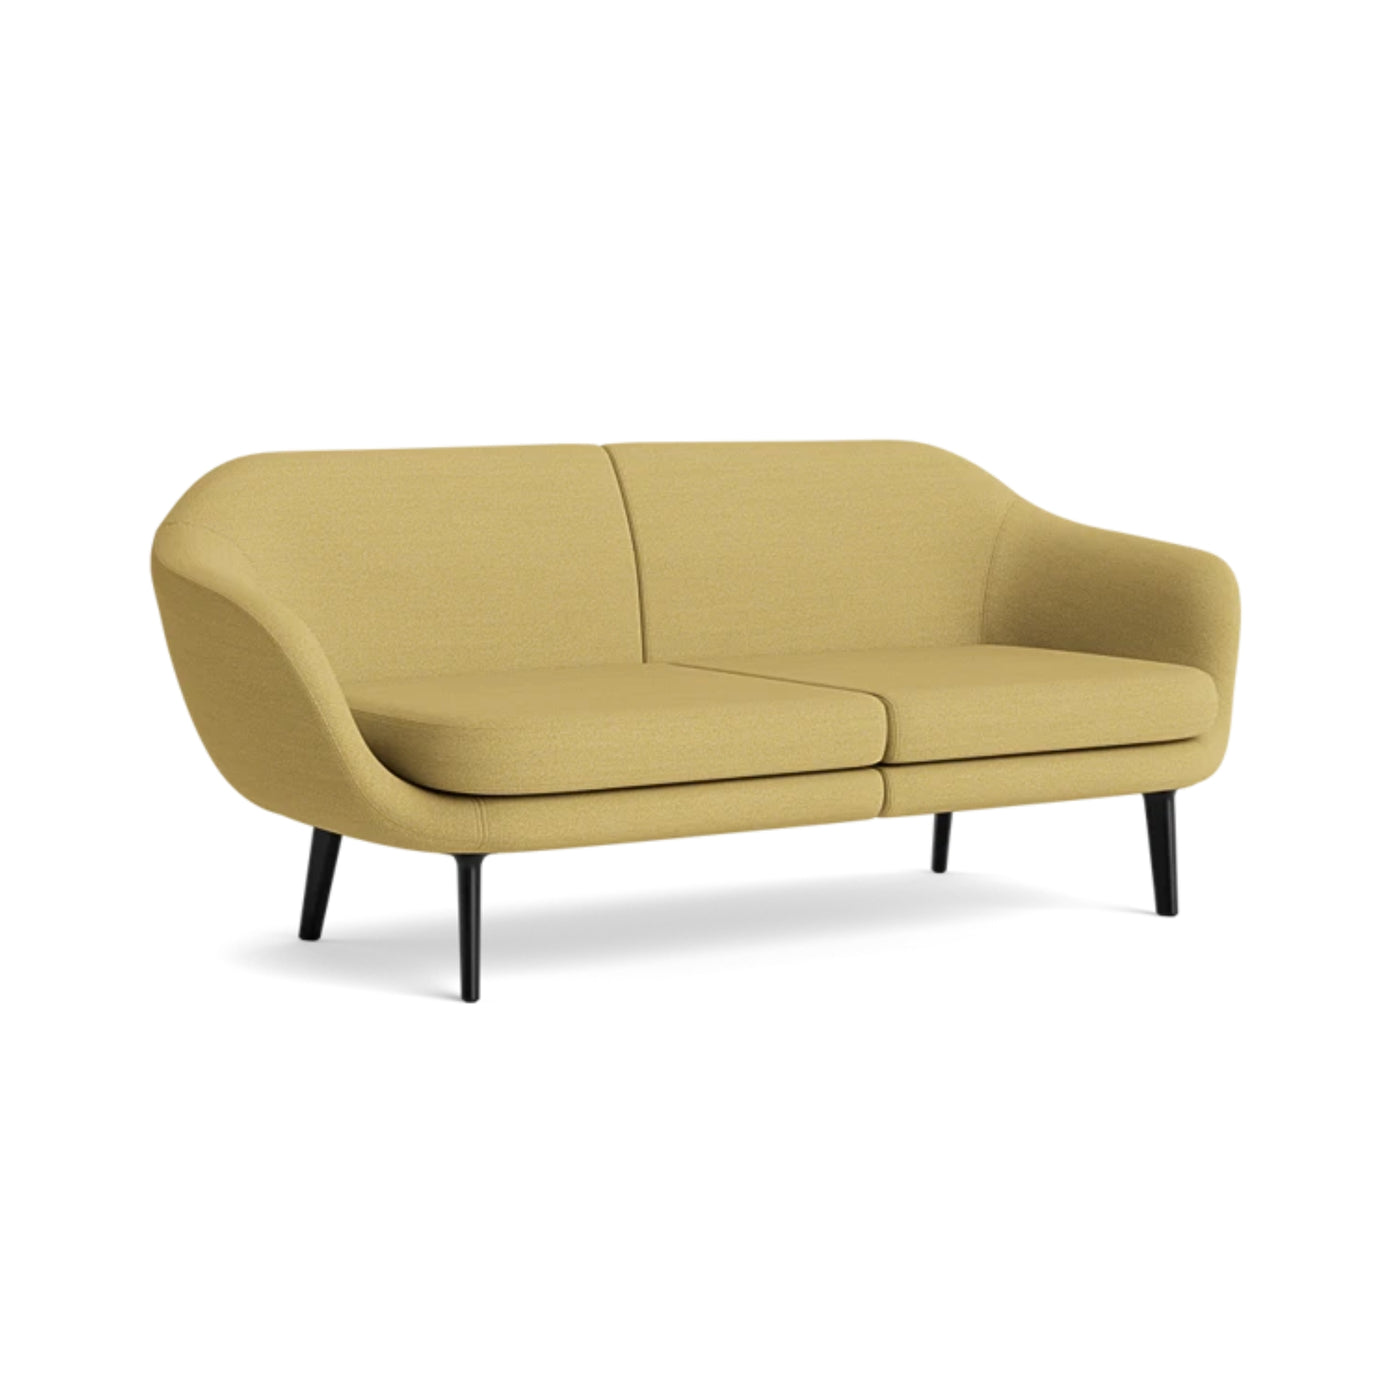 Normann Copenhagen Sum Modular 2 Seater Sofa. Made to order from someday designs. #colour_hallingdal-407